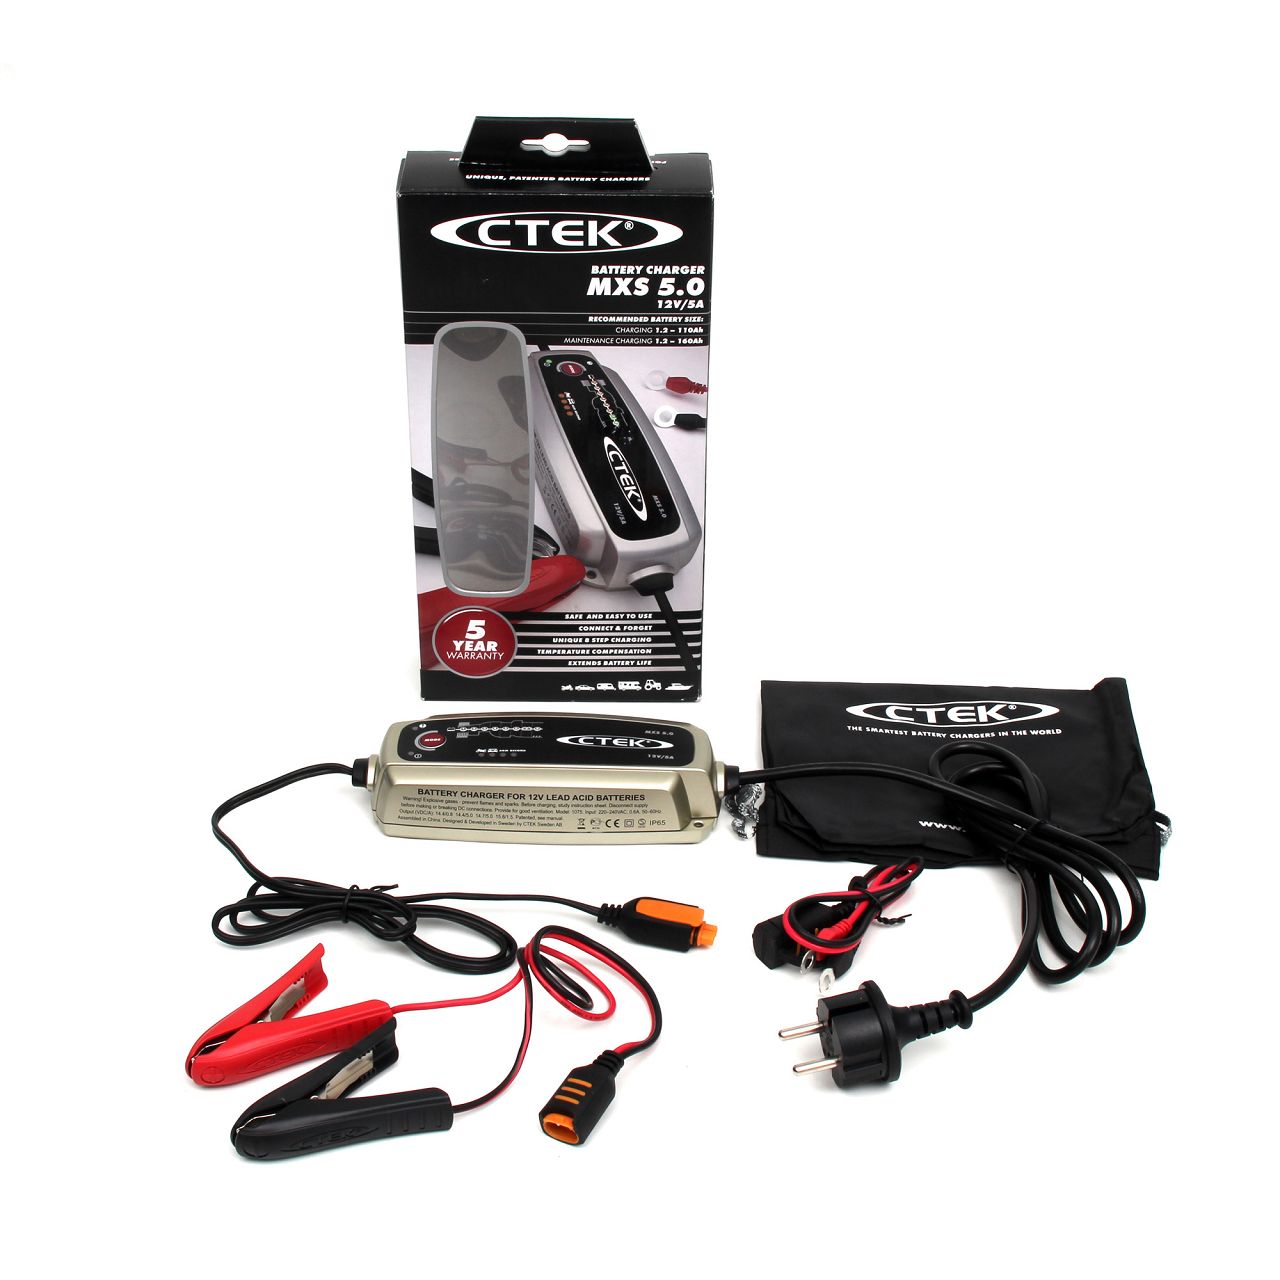 CTEK battery charger MXS 5.0